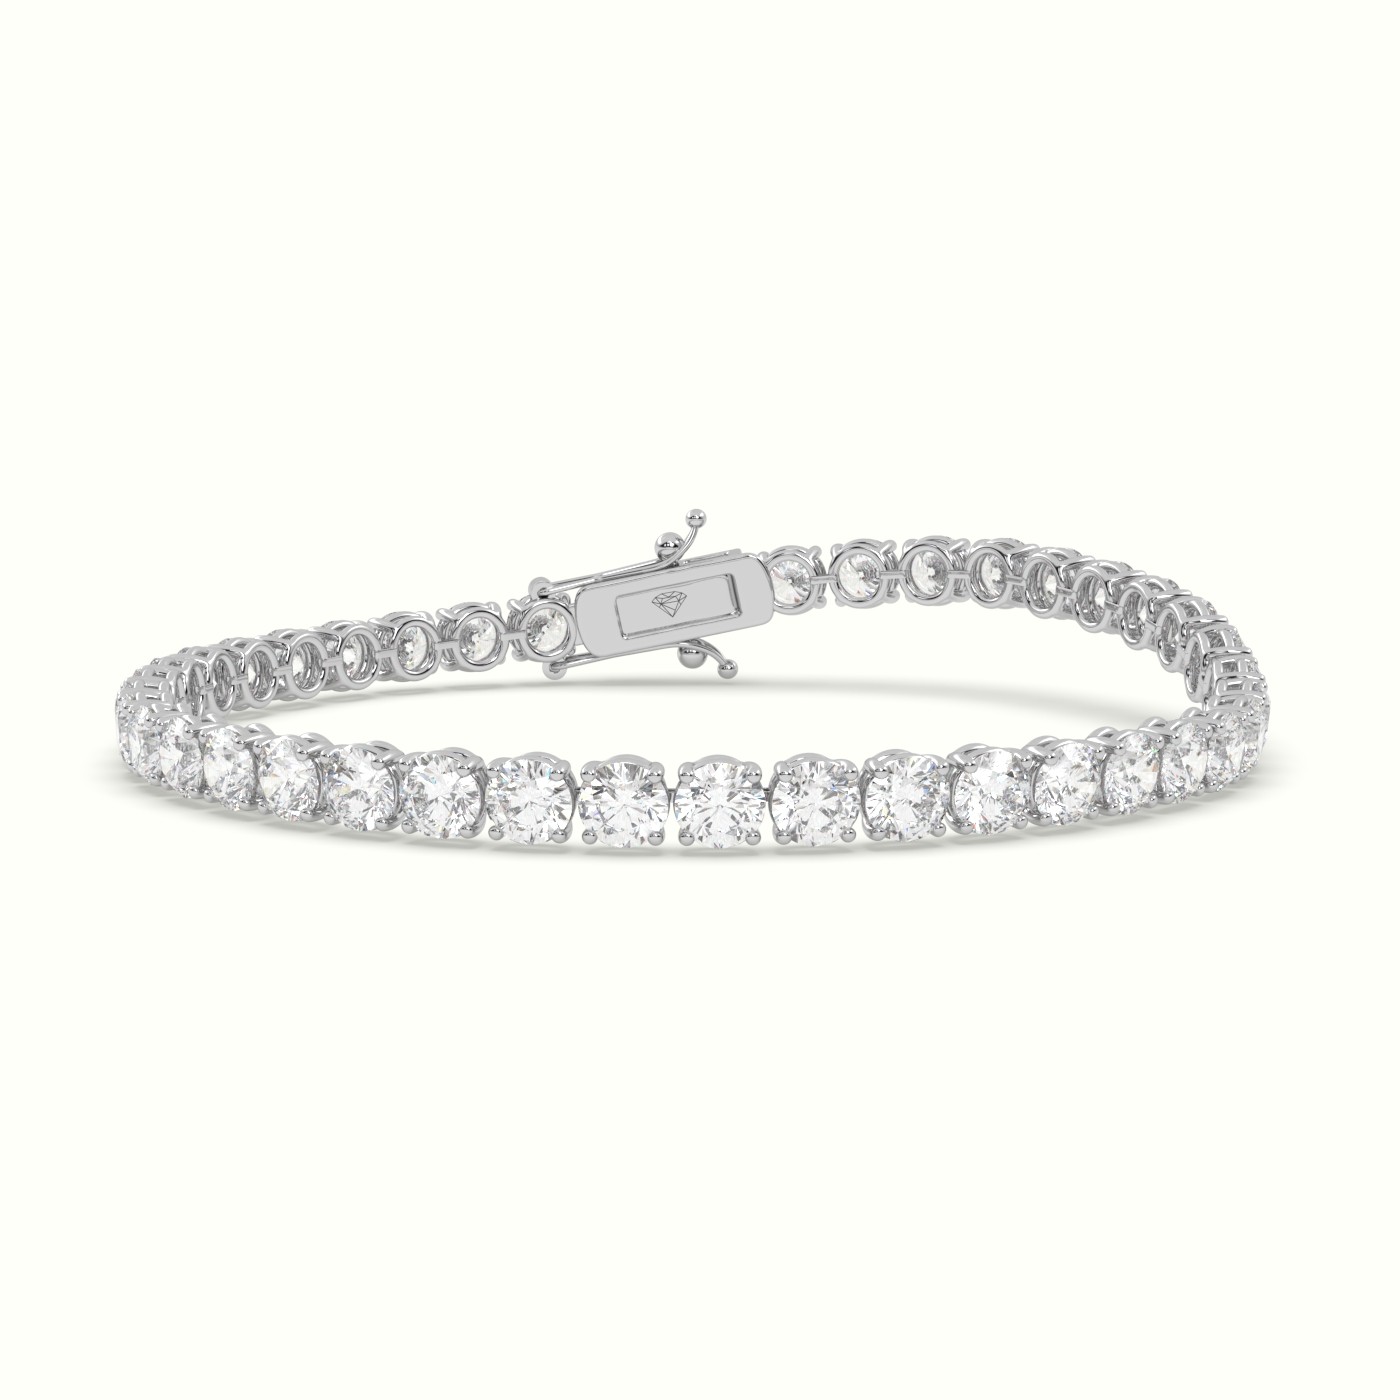 18k white gold  tennis bracelet 10.25 carat diamonds